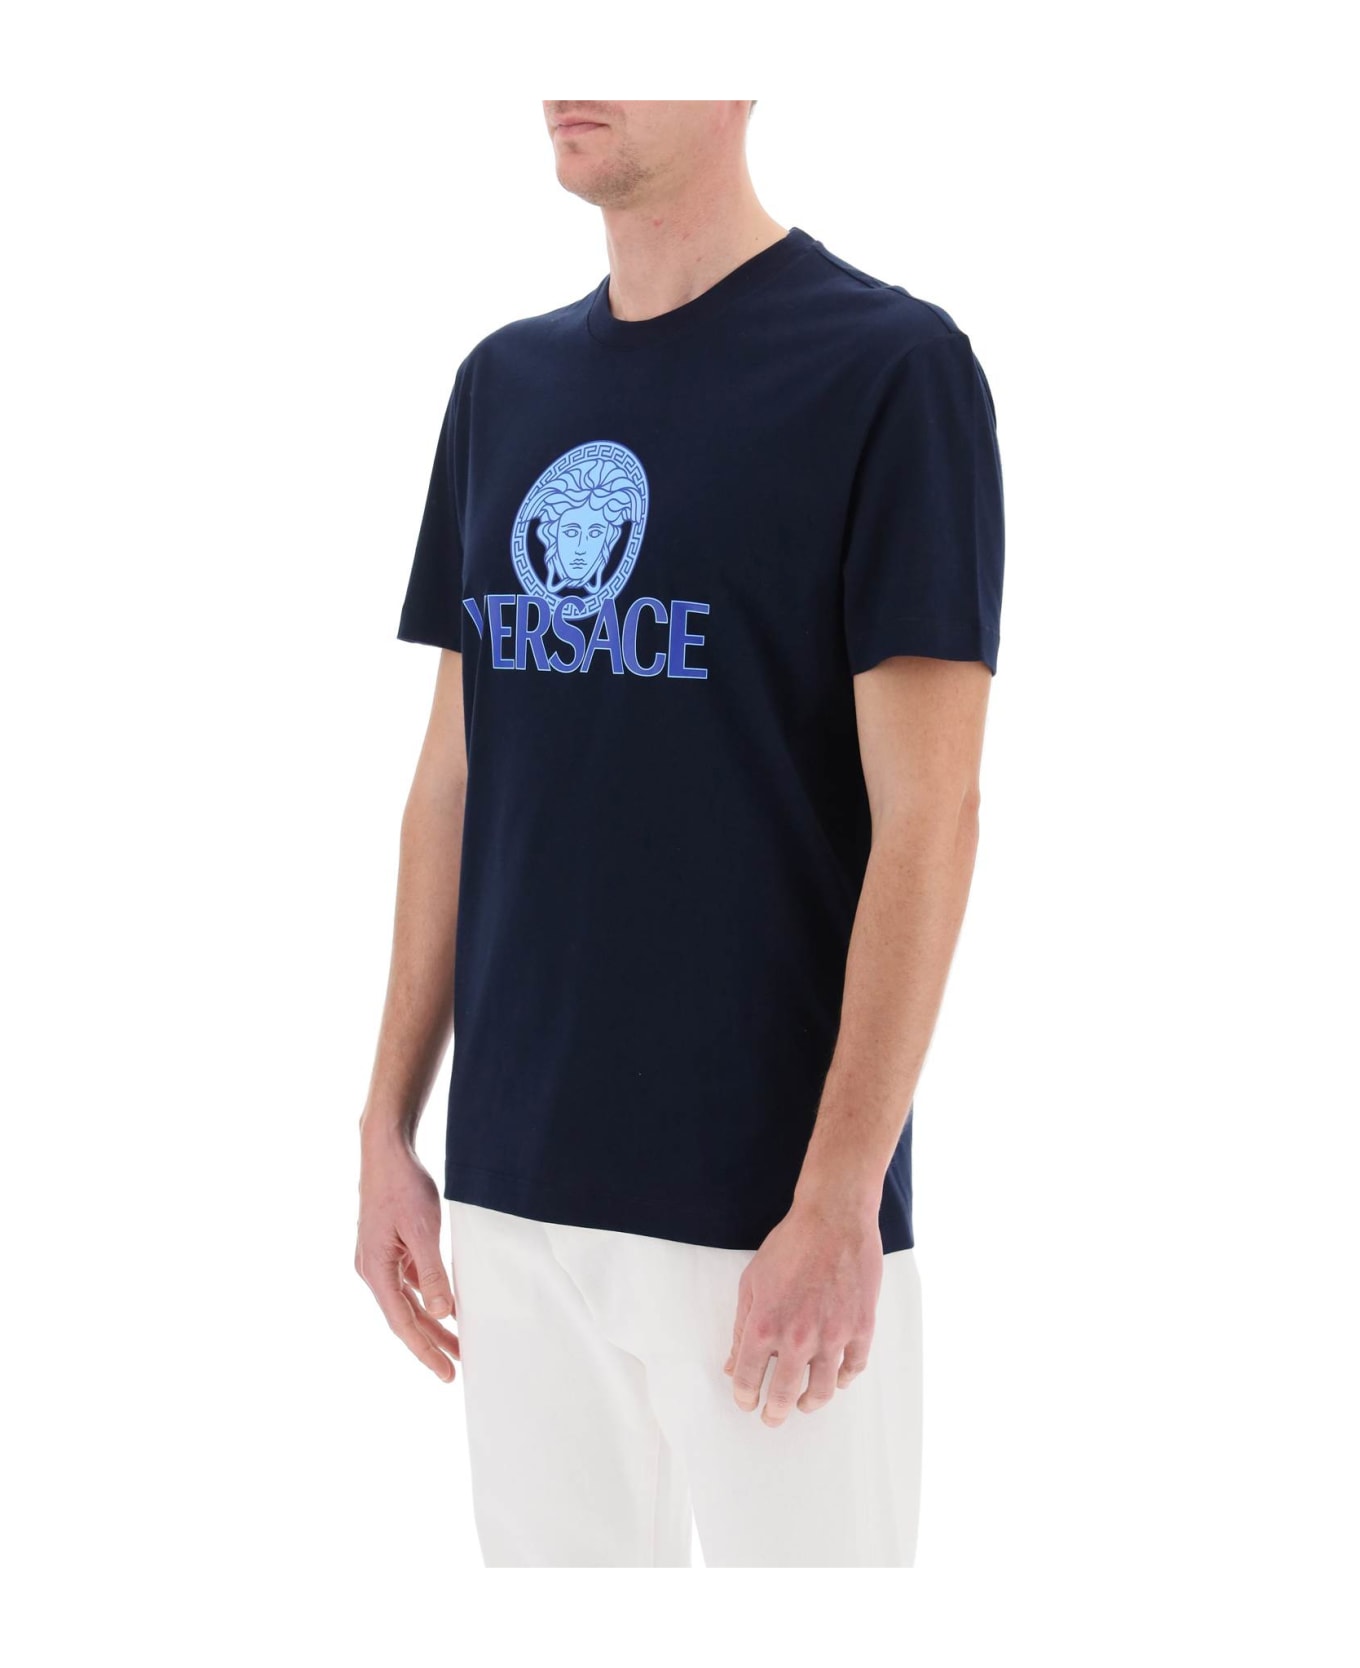 Versace Printed Cotton T-shirt - Blue シャツ